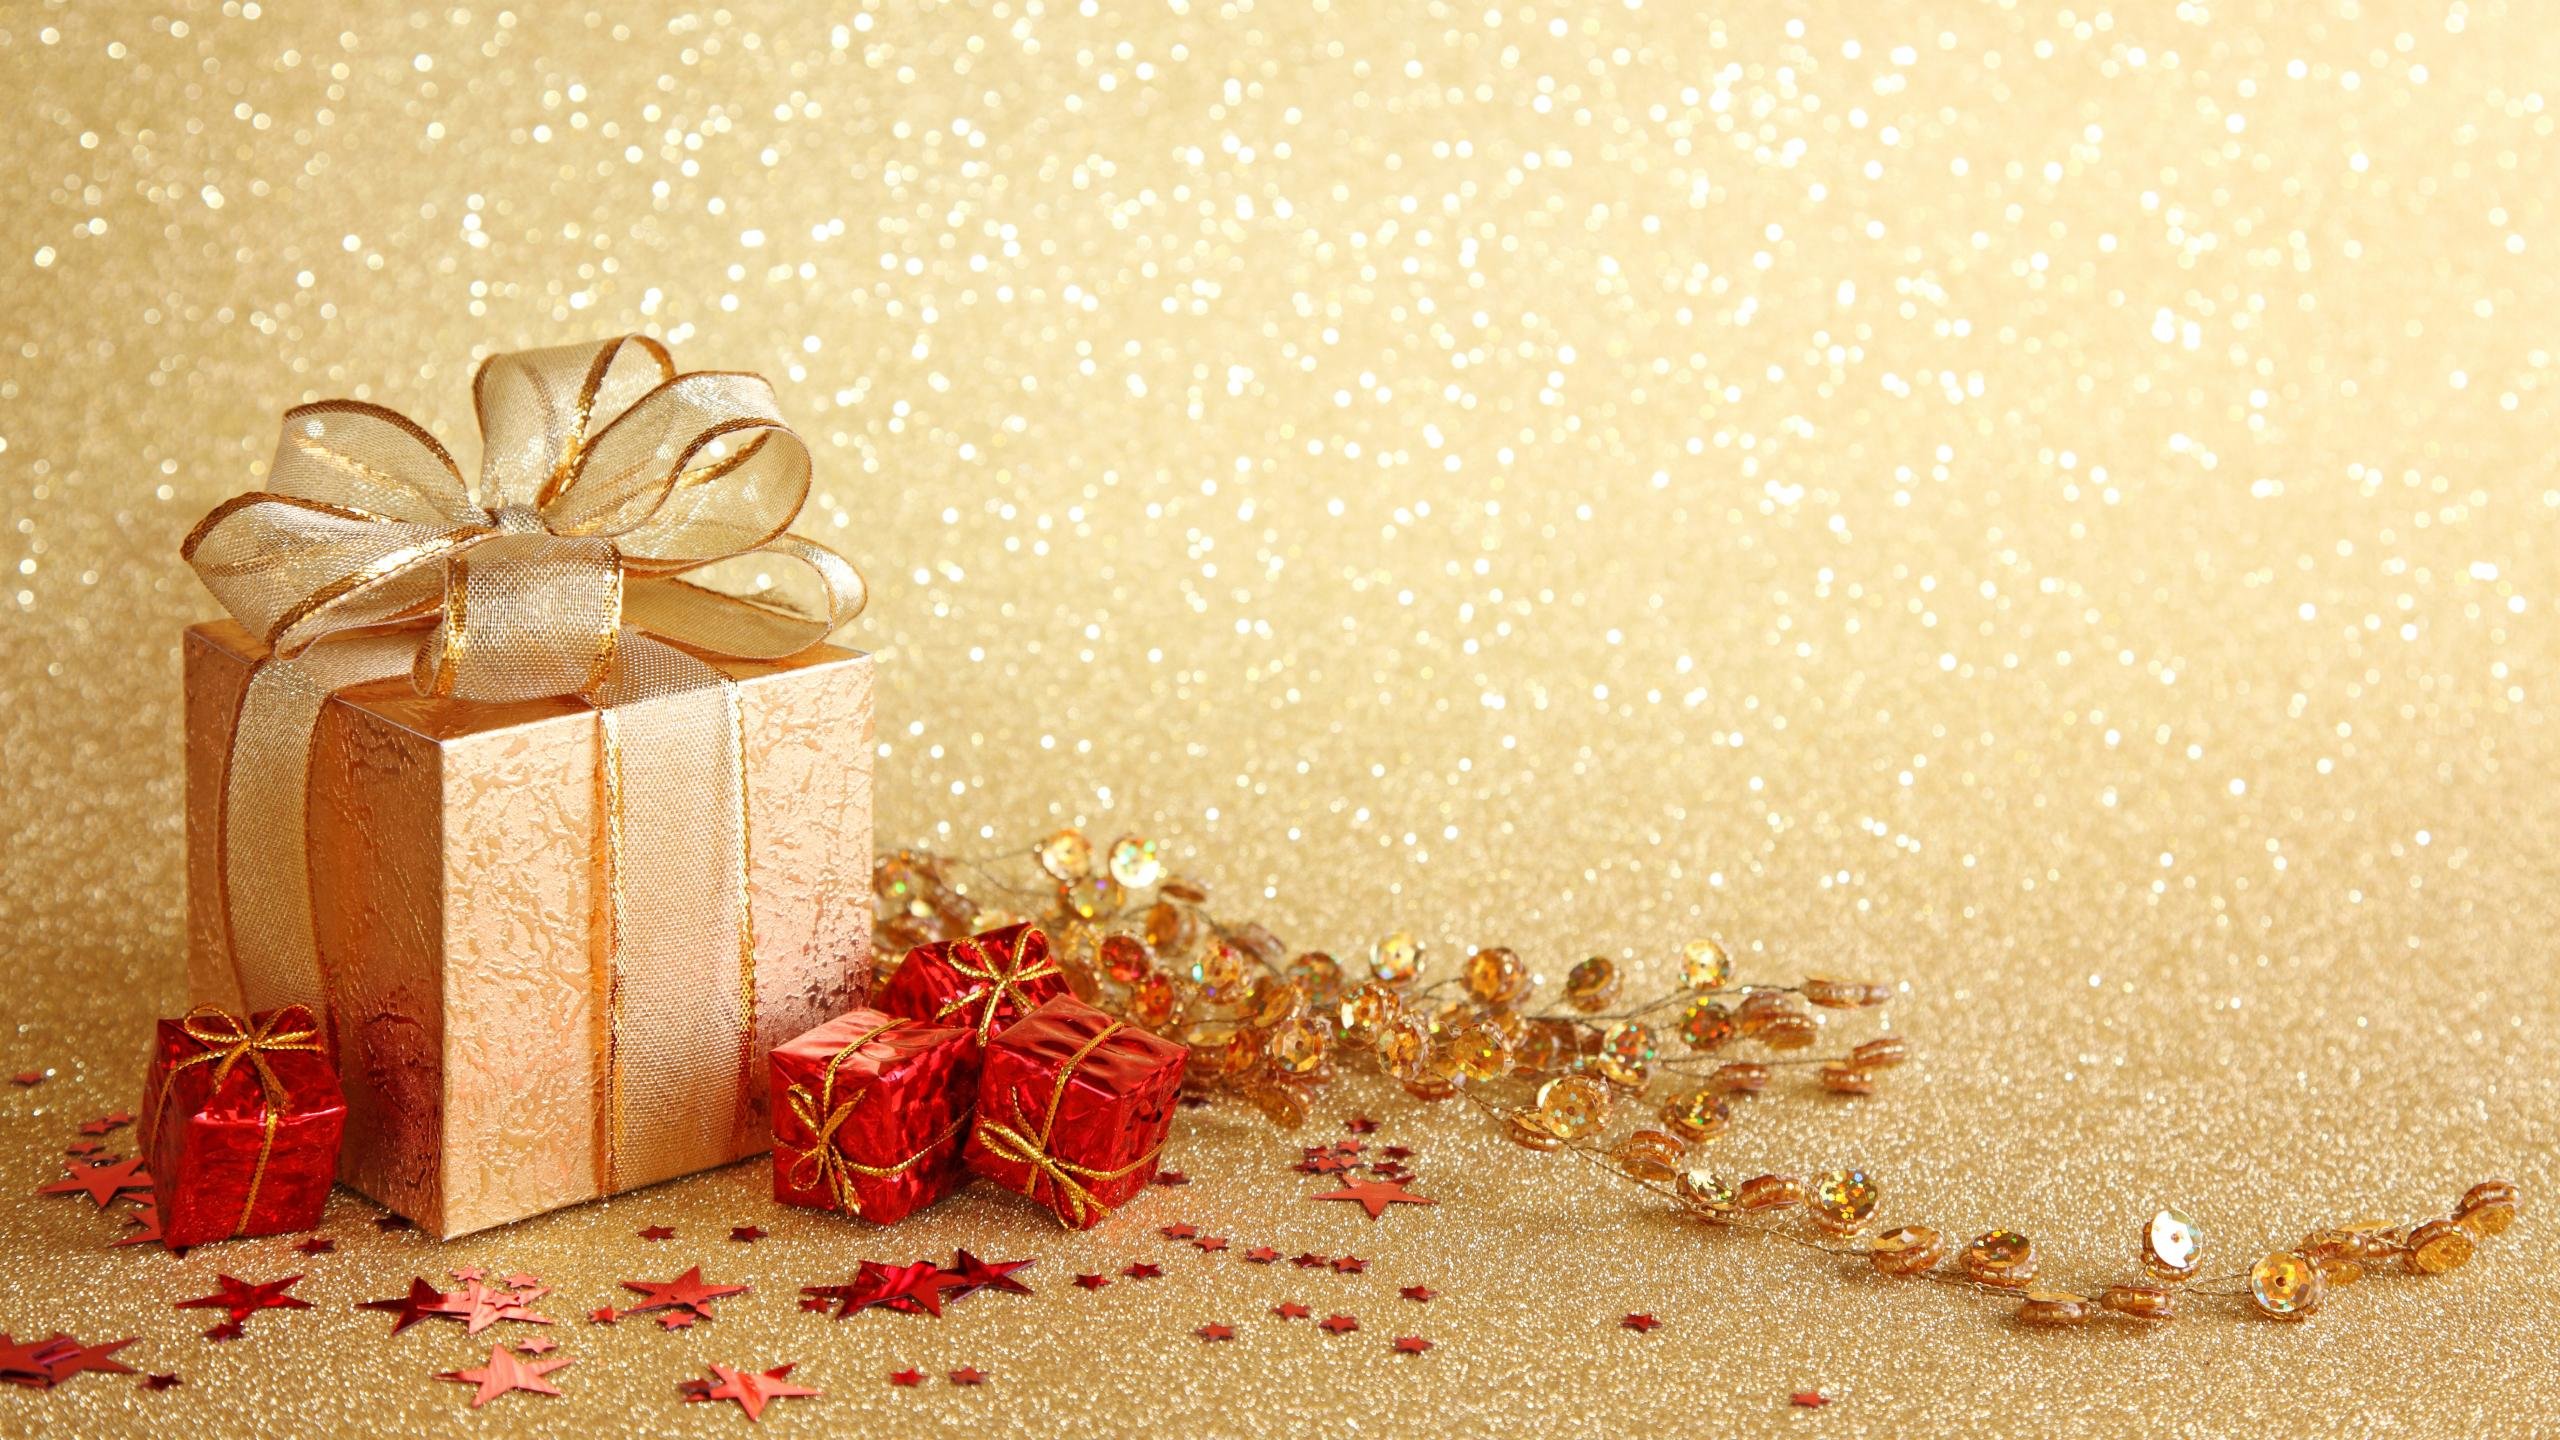 Free download Gift wallpapers 2560x1440 desktop backgrounds [2560x1440] for  your Desktop, Mobile & Tablet | Explore 31+ Gift Wallpapers | Christmas Gift  Background, Christmas Gift Wallpaper, Diwali Gift Wallpaper